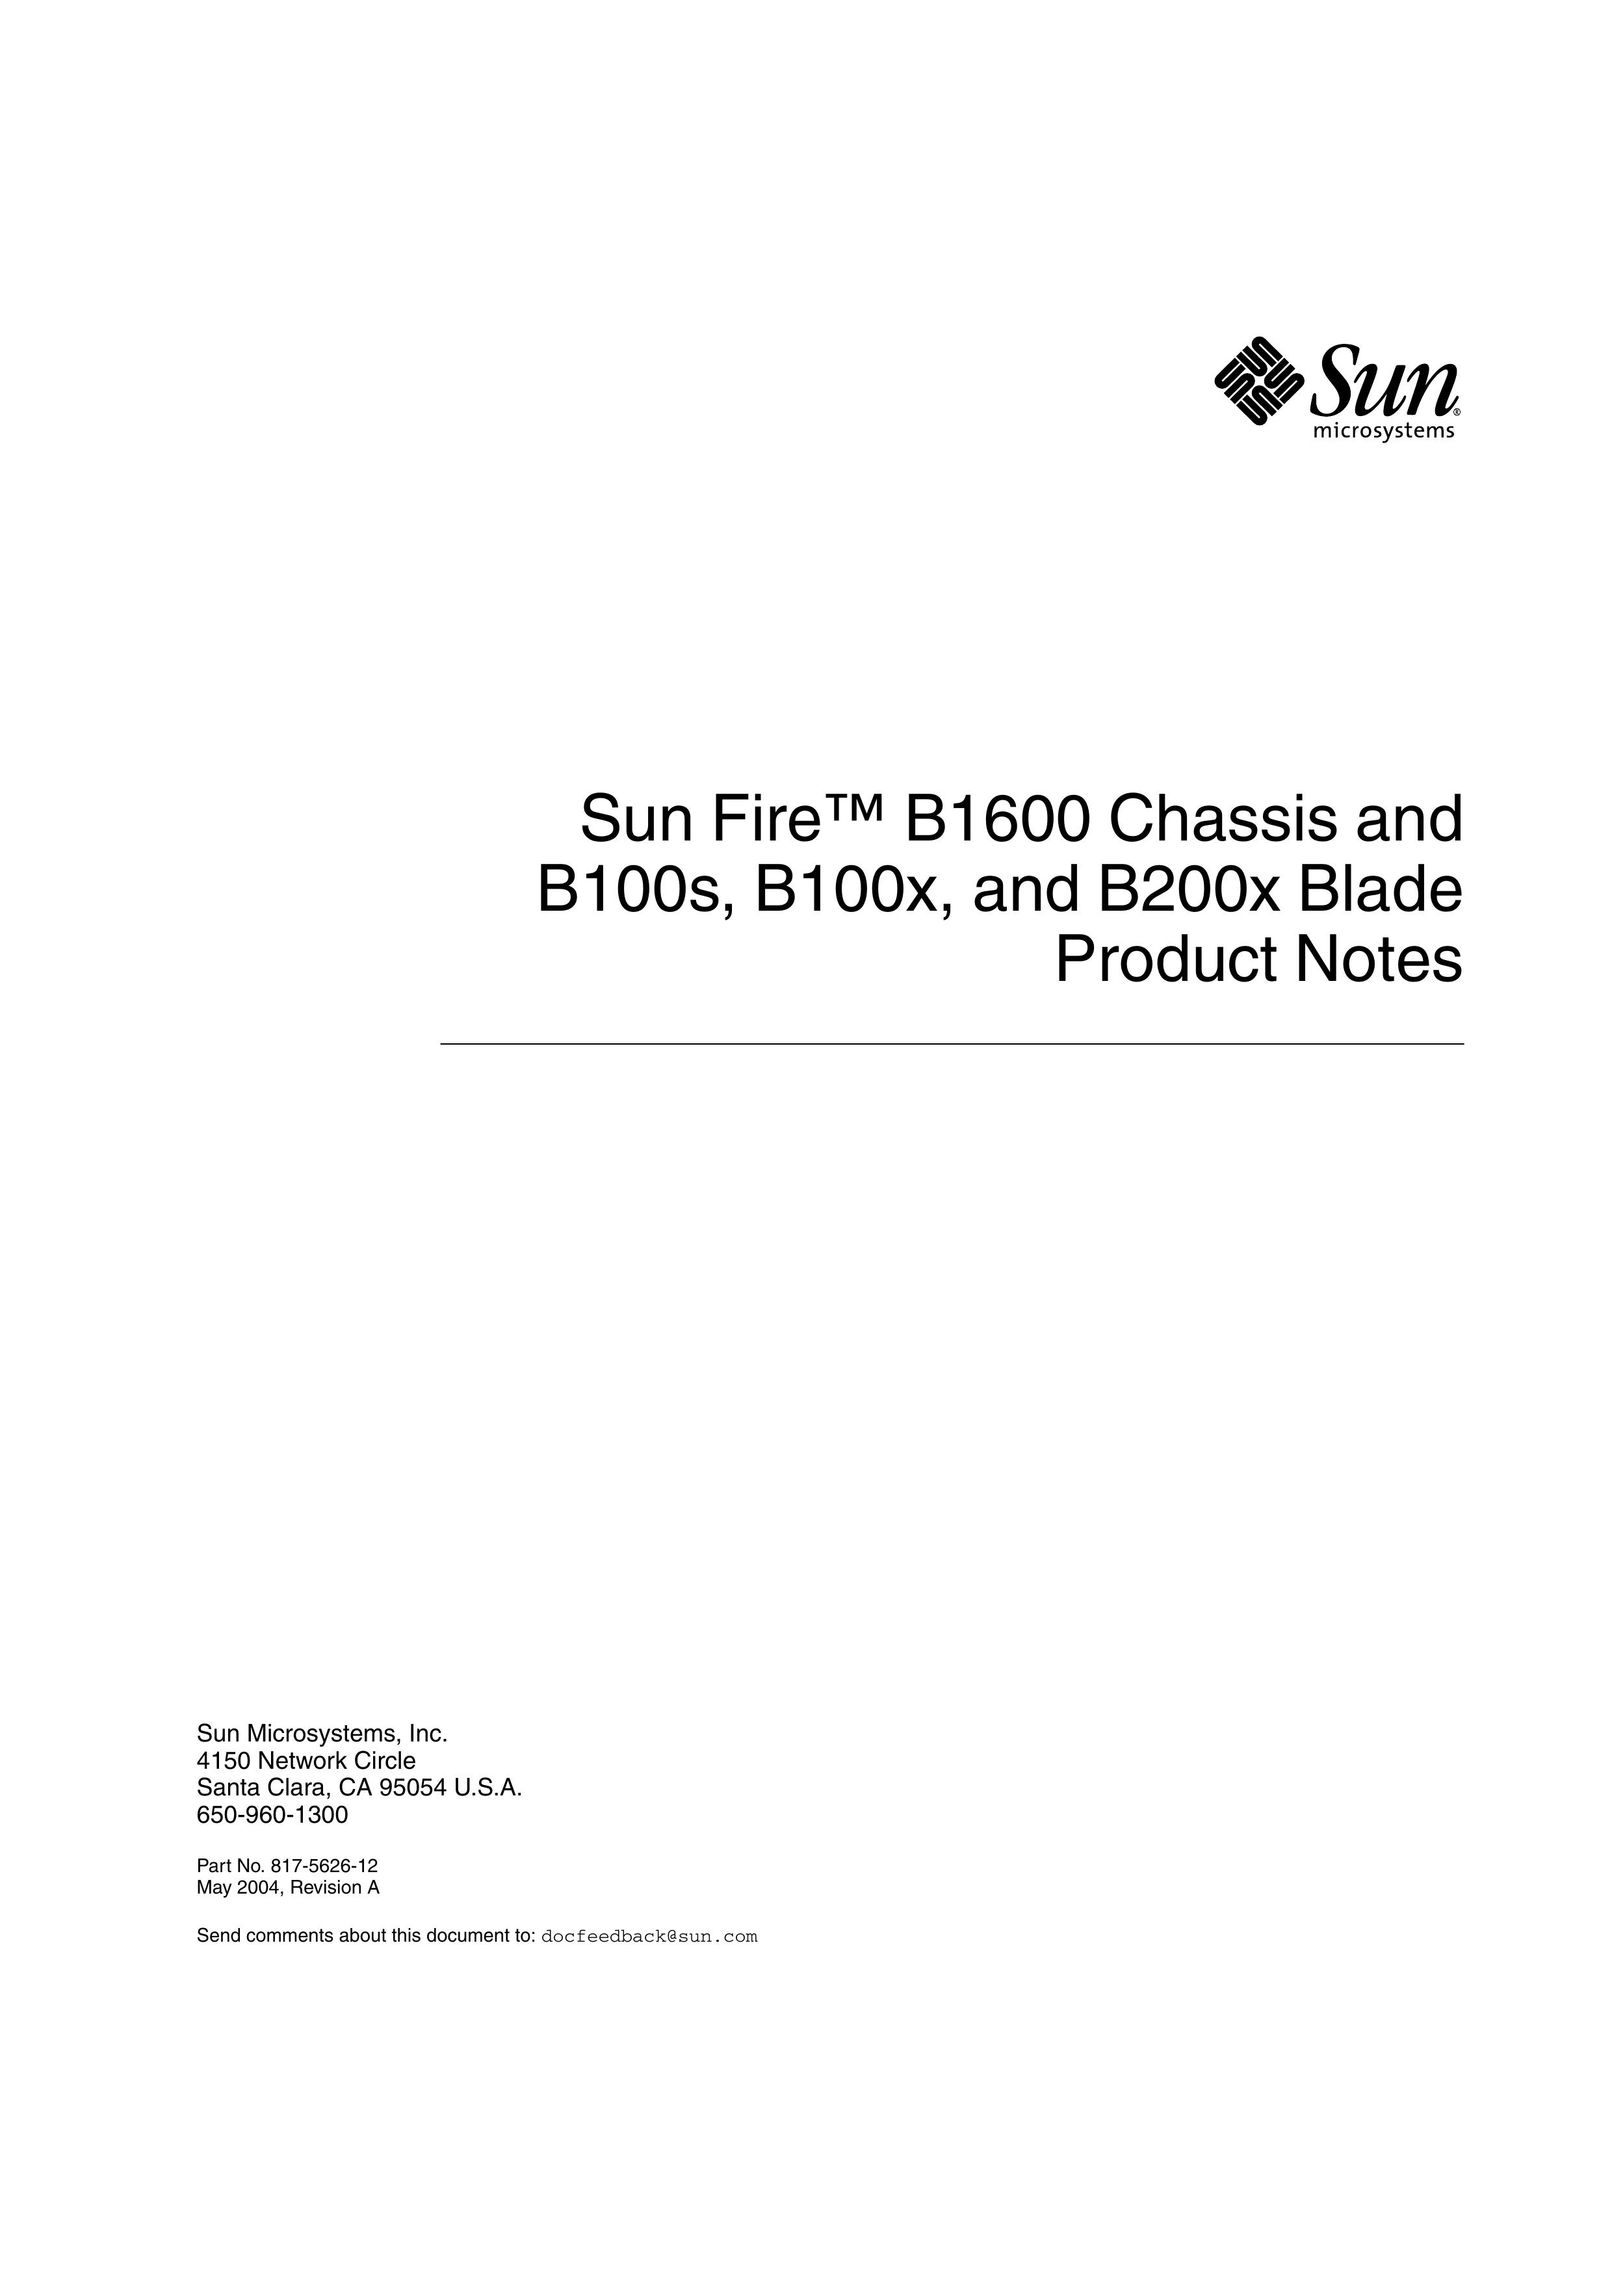 Sun Microsystems B200X BLADE TV Video Accessories User Manual